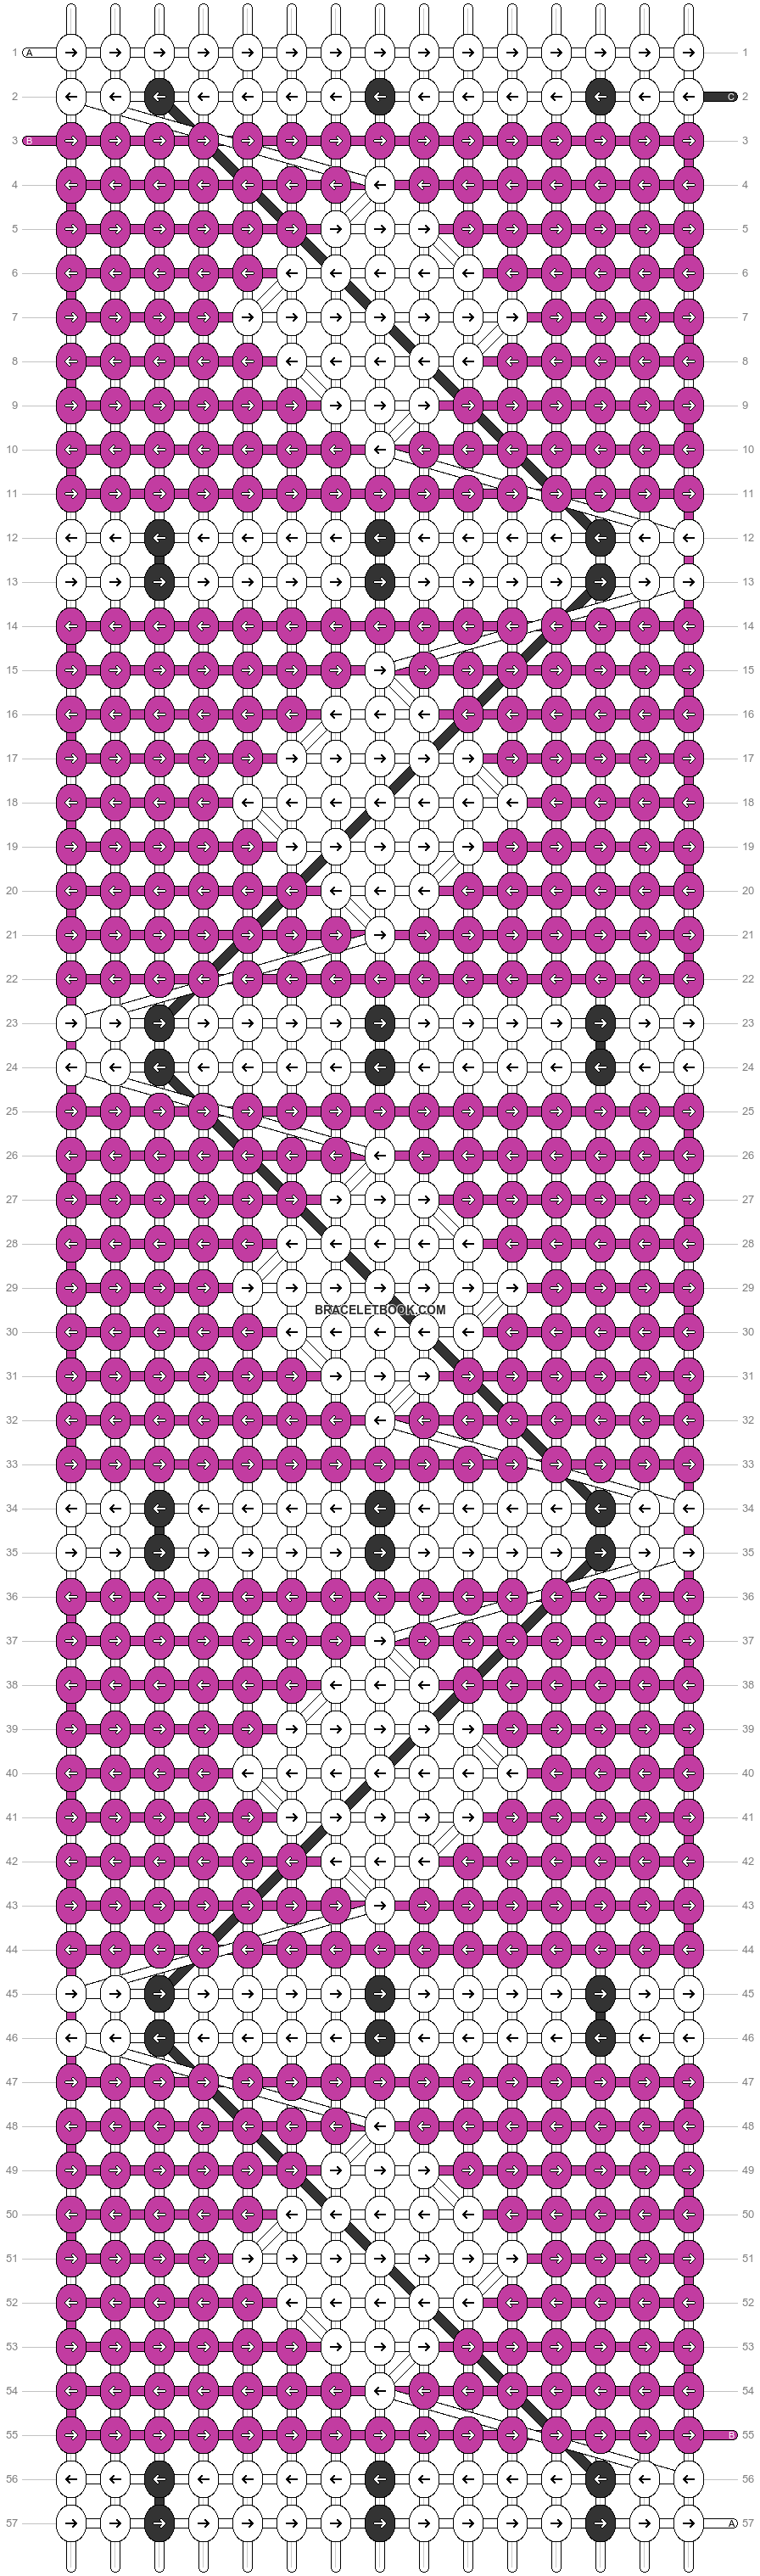 Alpha pattern #50169 pattern